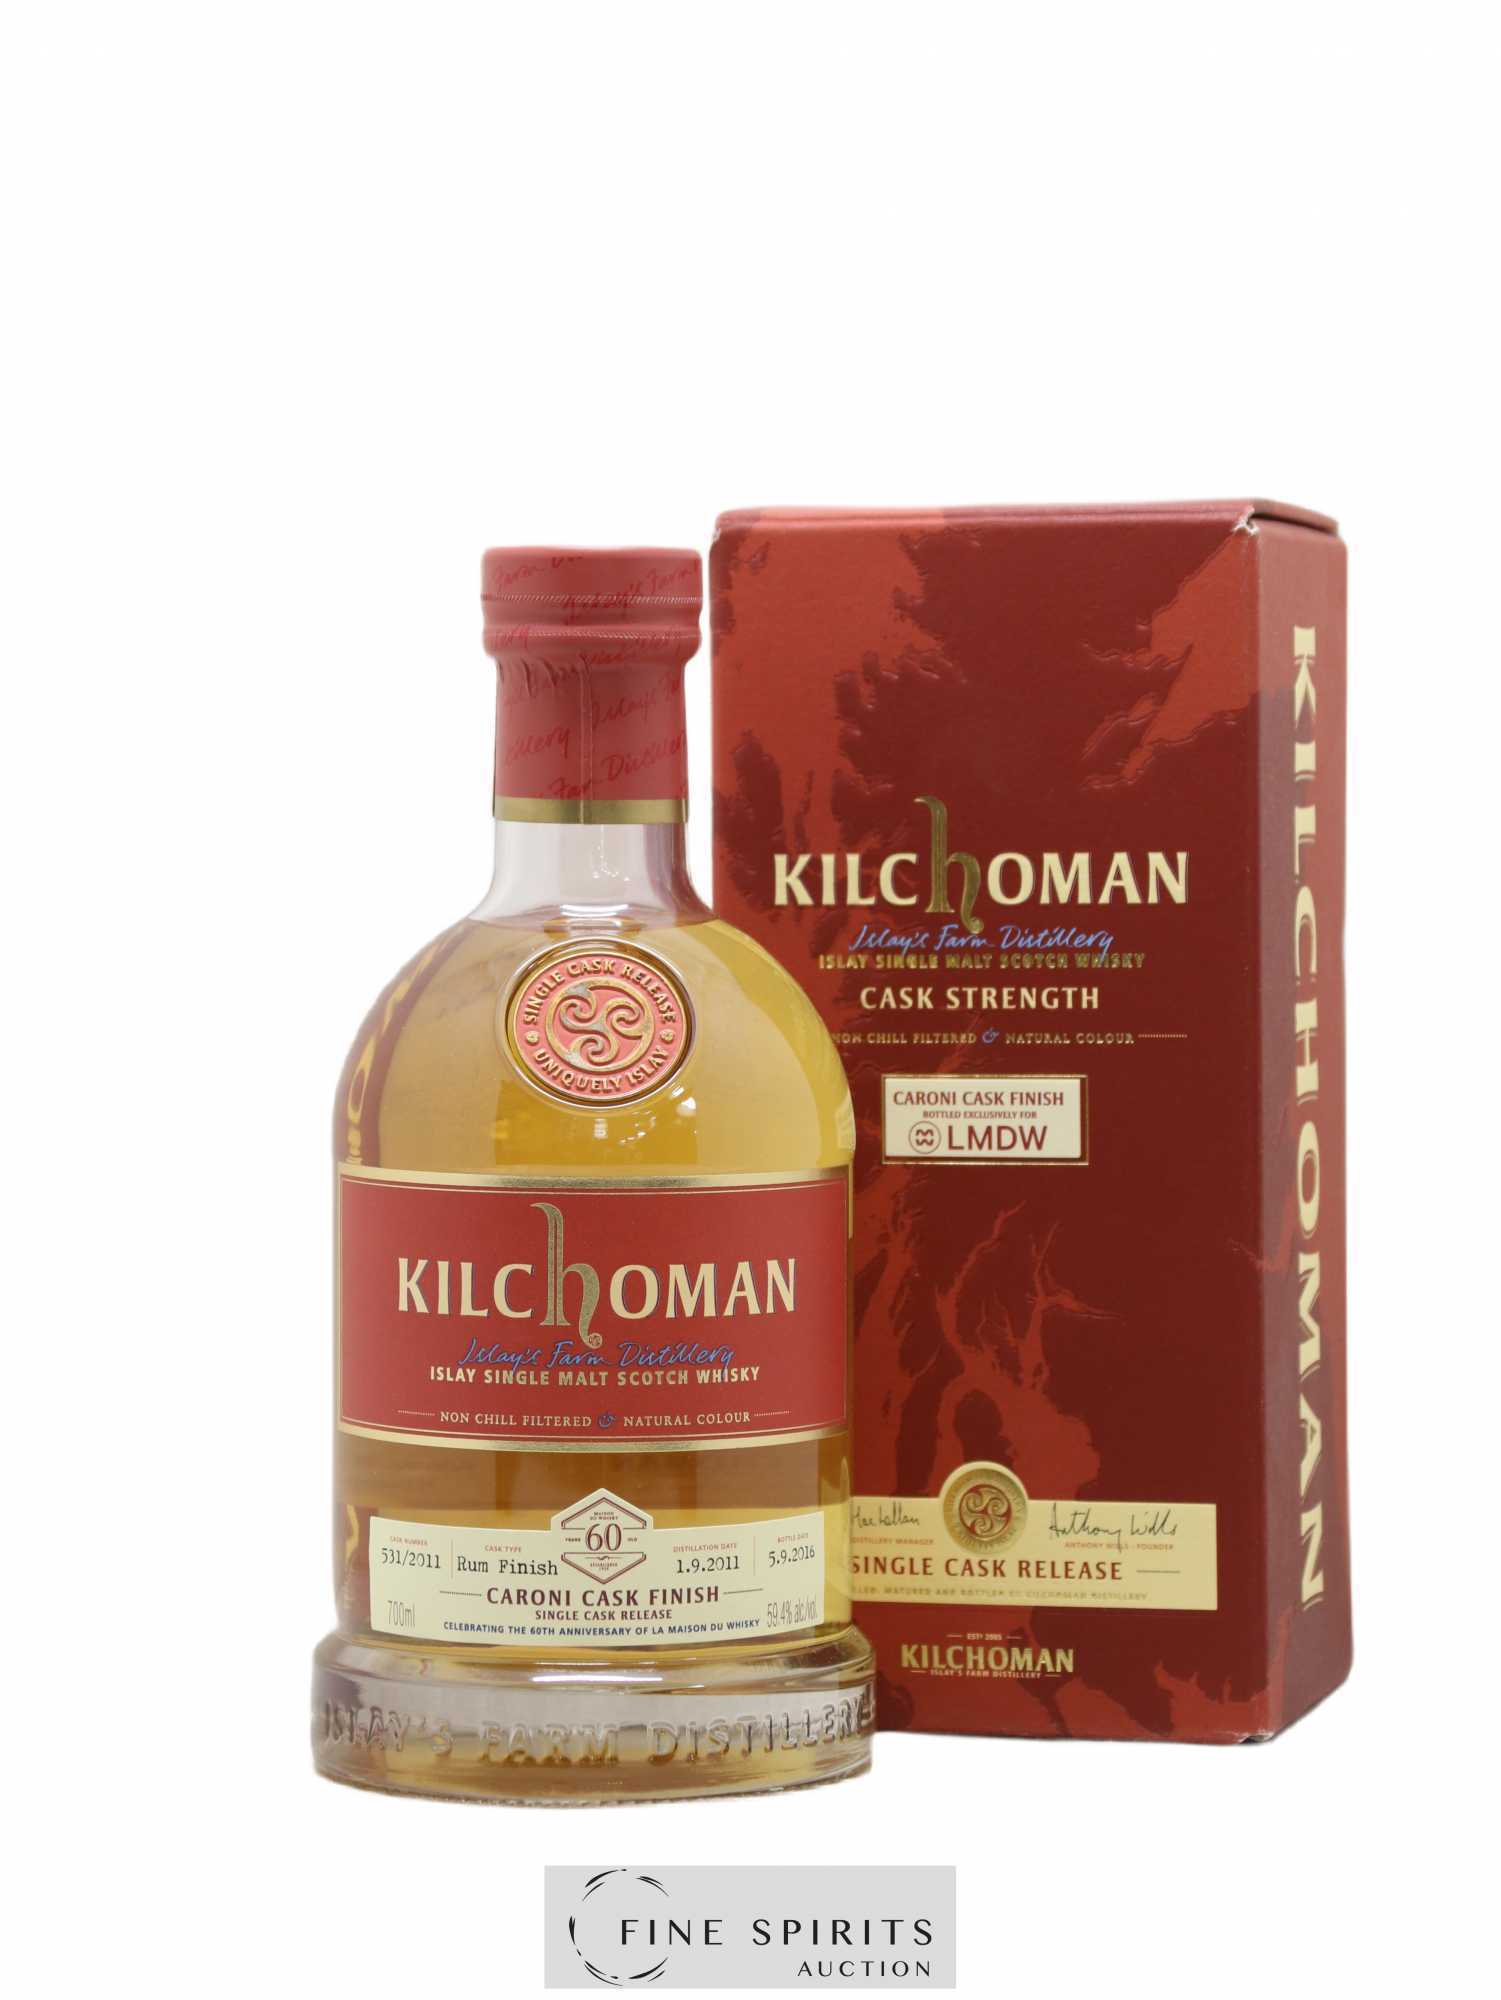 Kilchoman 2011 Of. Caroni Cask n°5312011 - One of 258 - bottled 2016 LMDW 60th Anniversary 